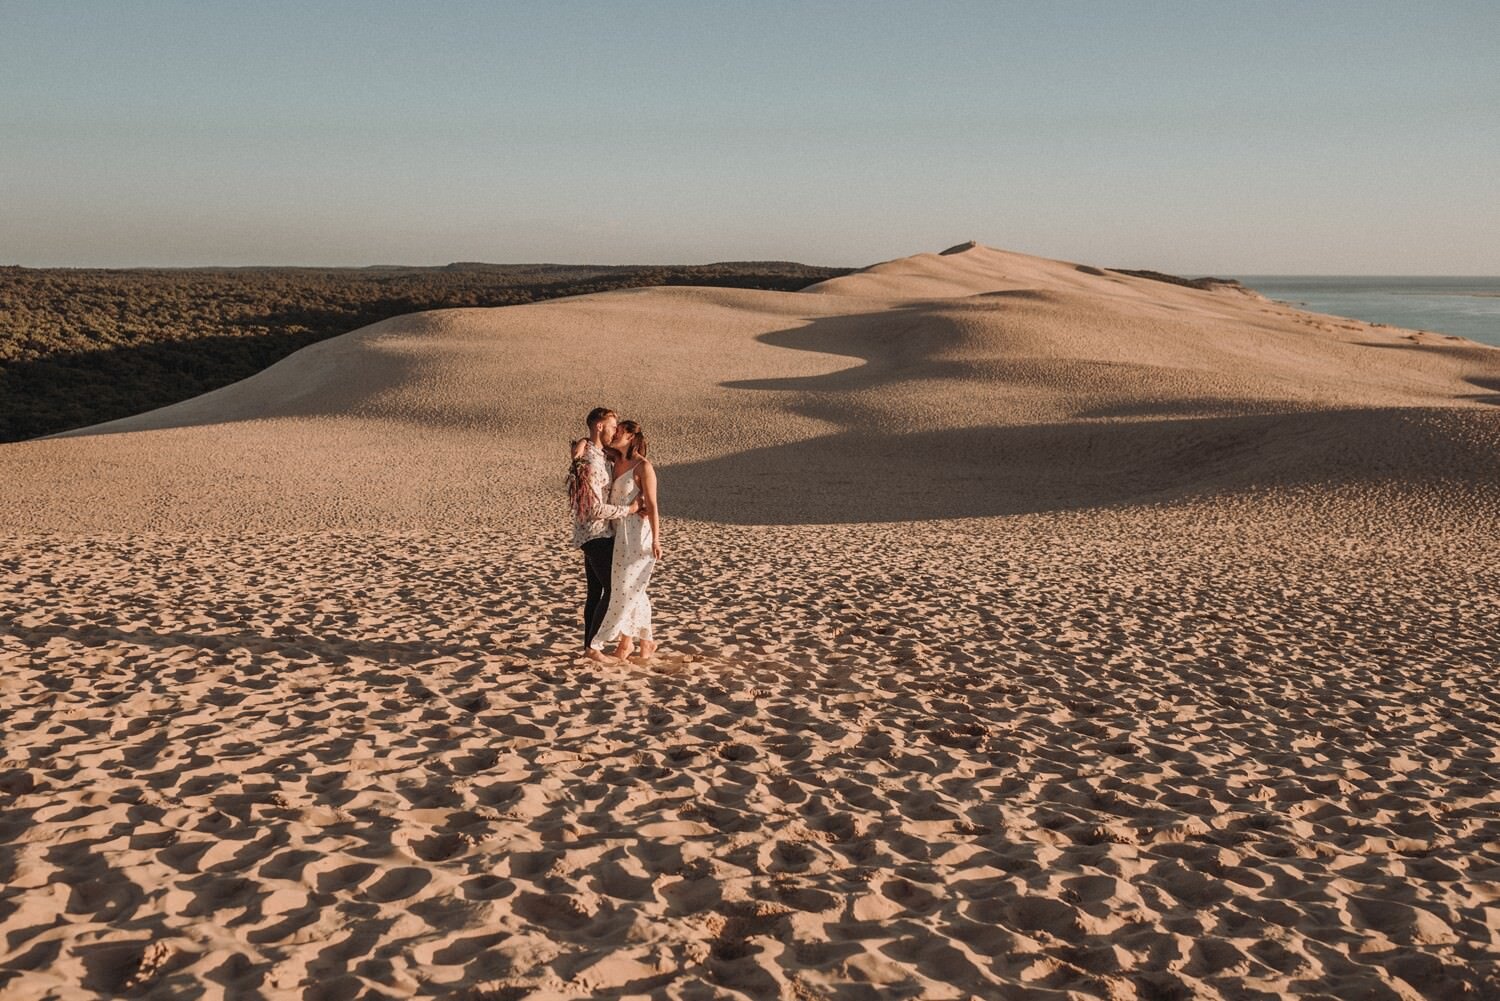 wayuphighelopements-elopement-france-bordeaux-dunes-de-pilat-destination-wedding (8).jpg